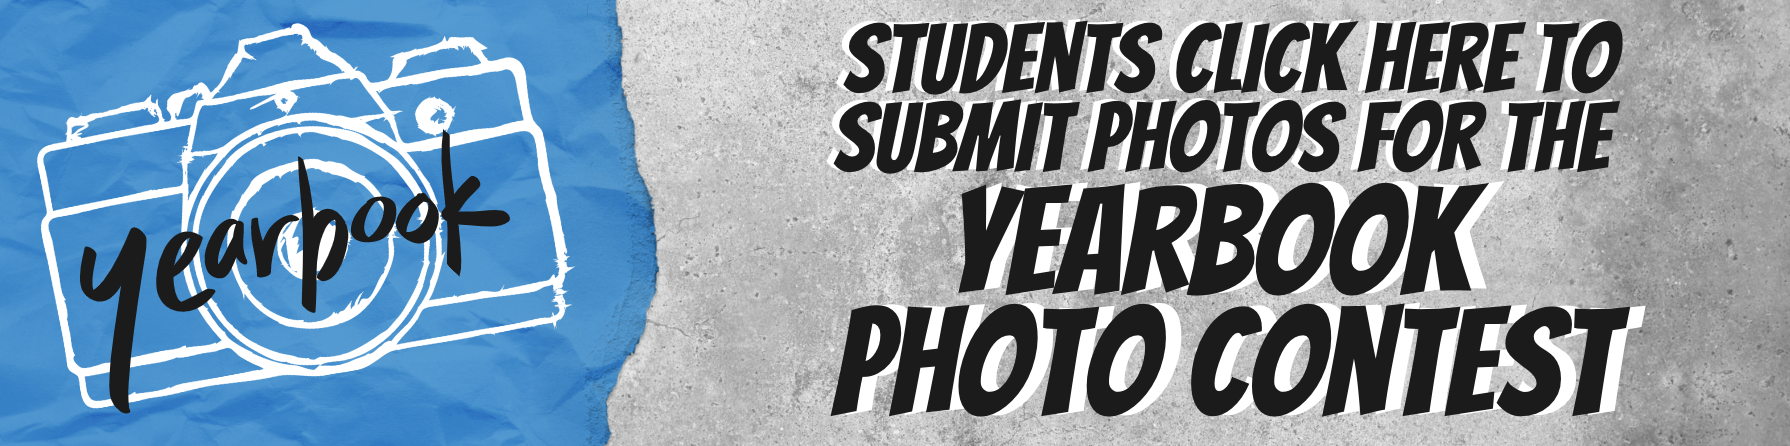 22-23 YrBk Photo Contest Button